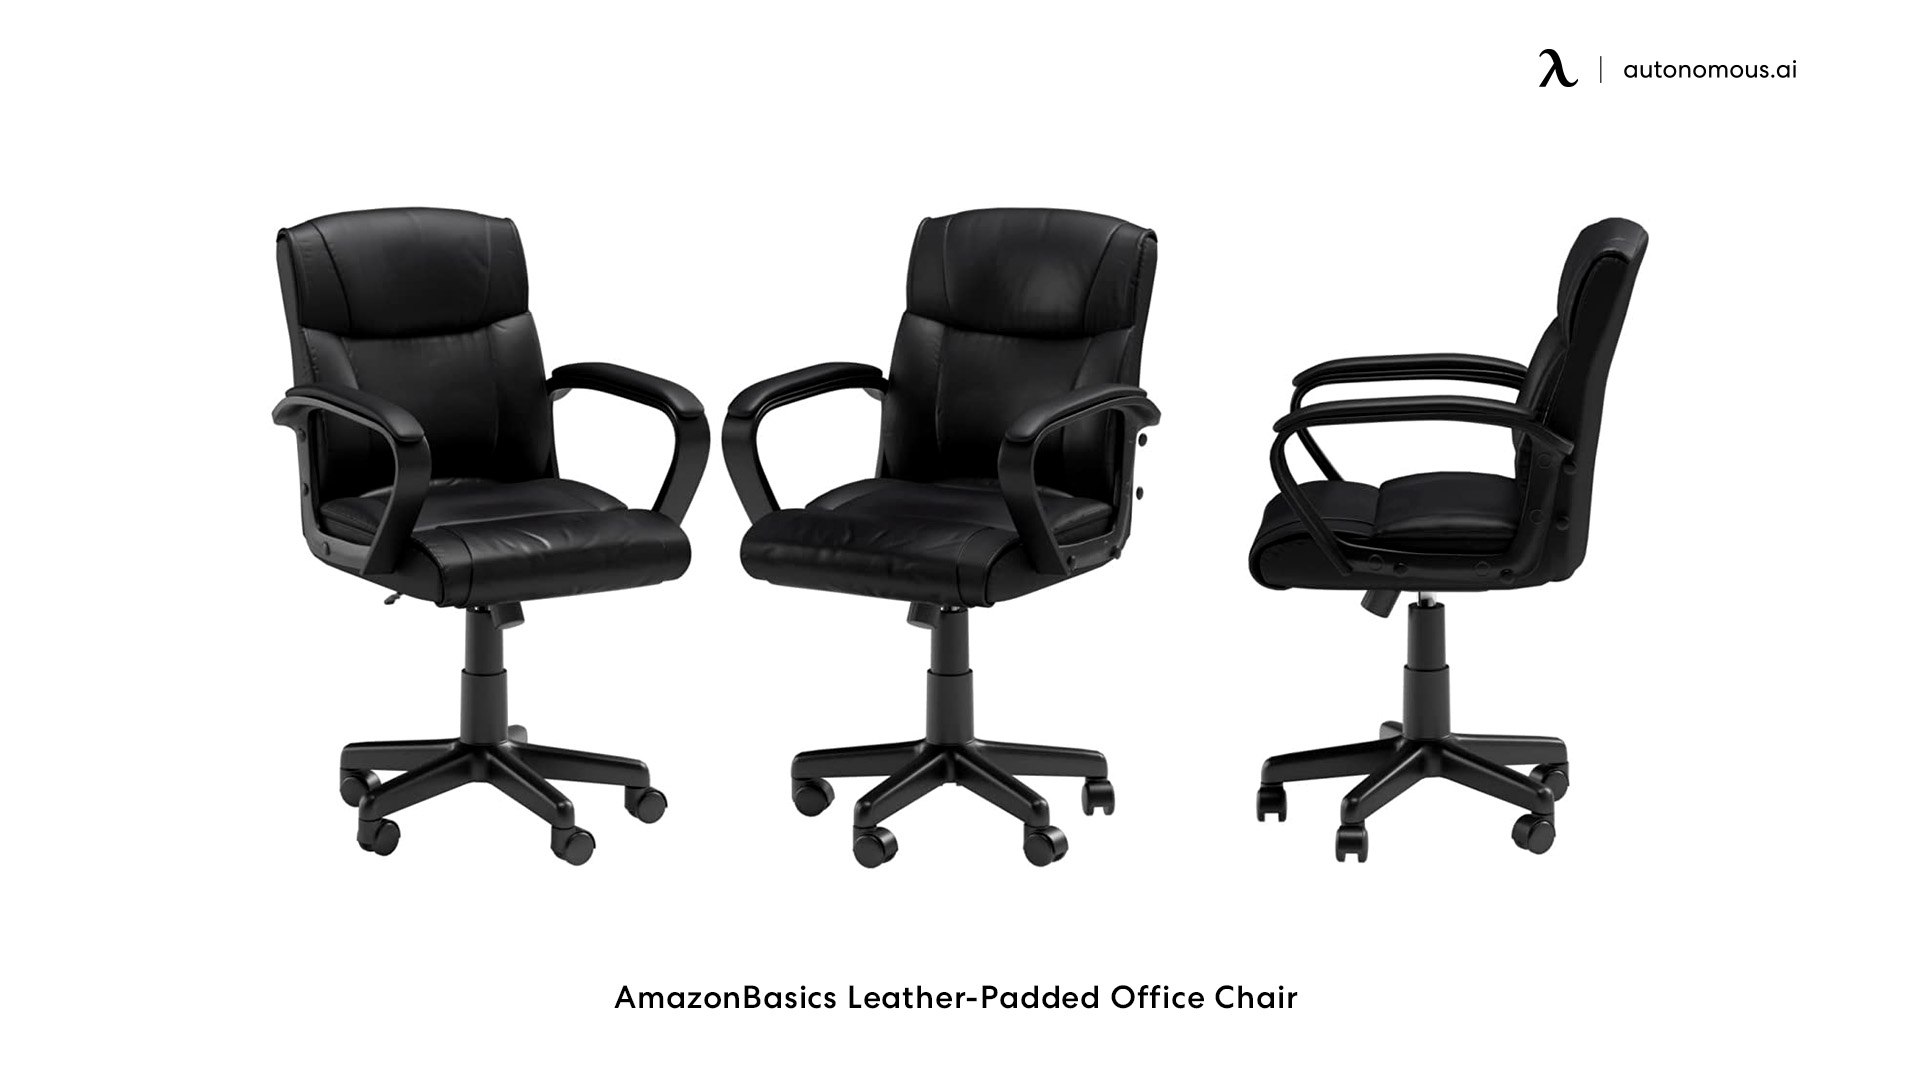 AmazonBasics Leather-Padded Office Chair